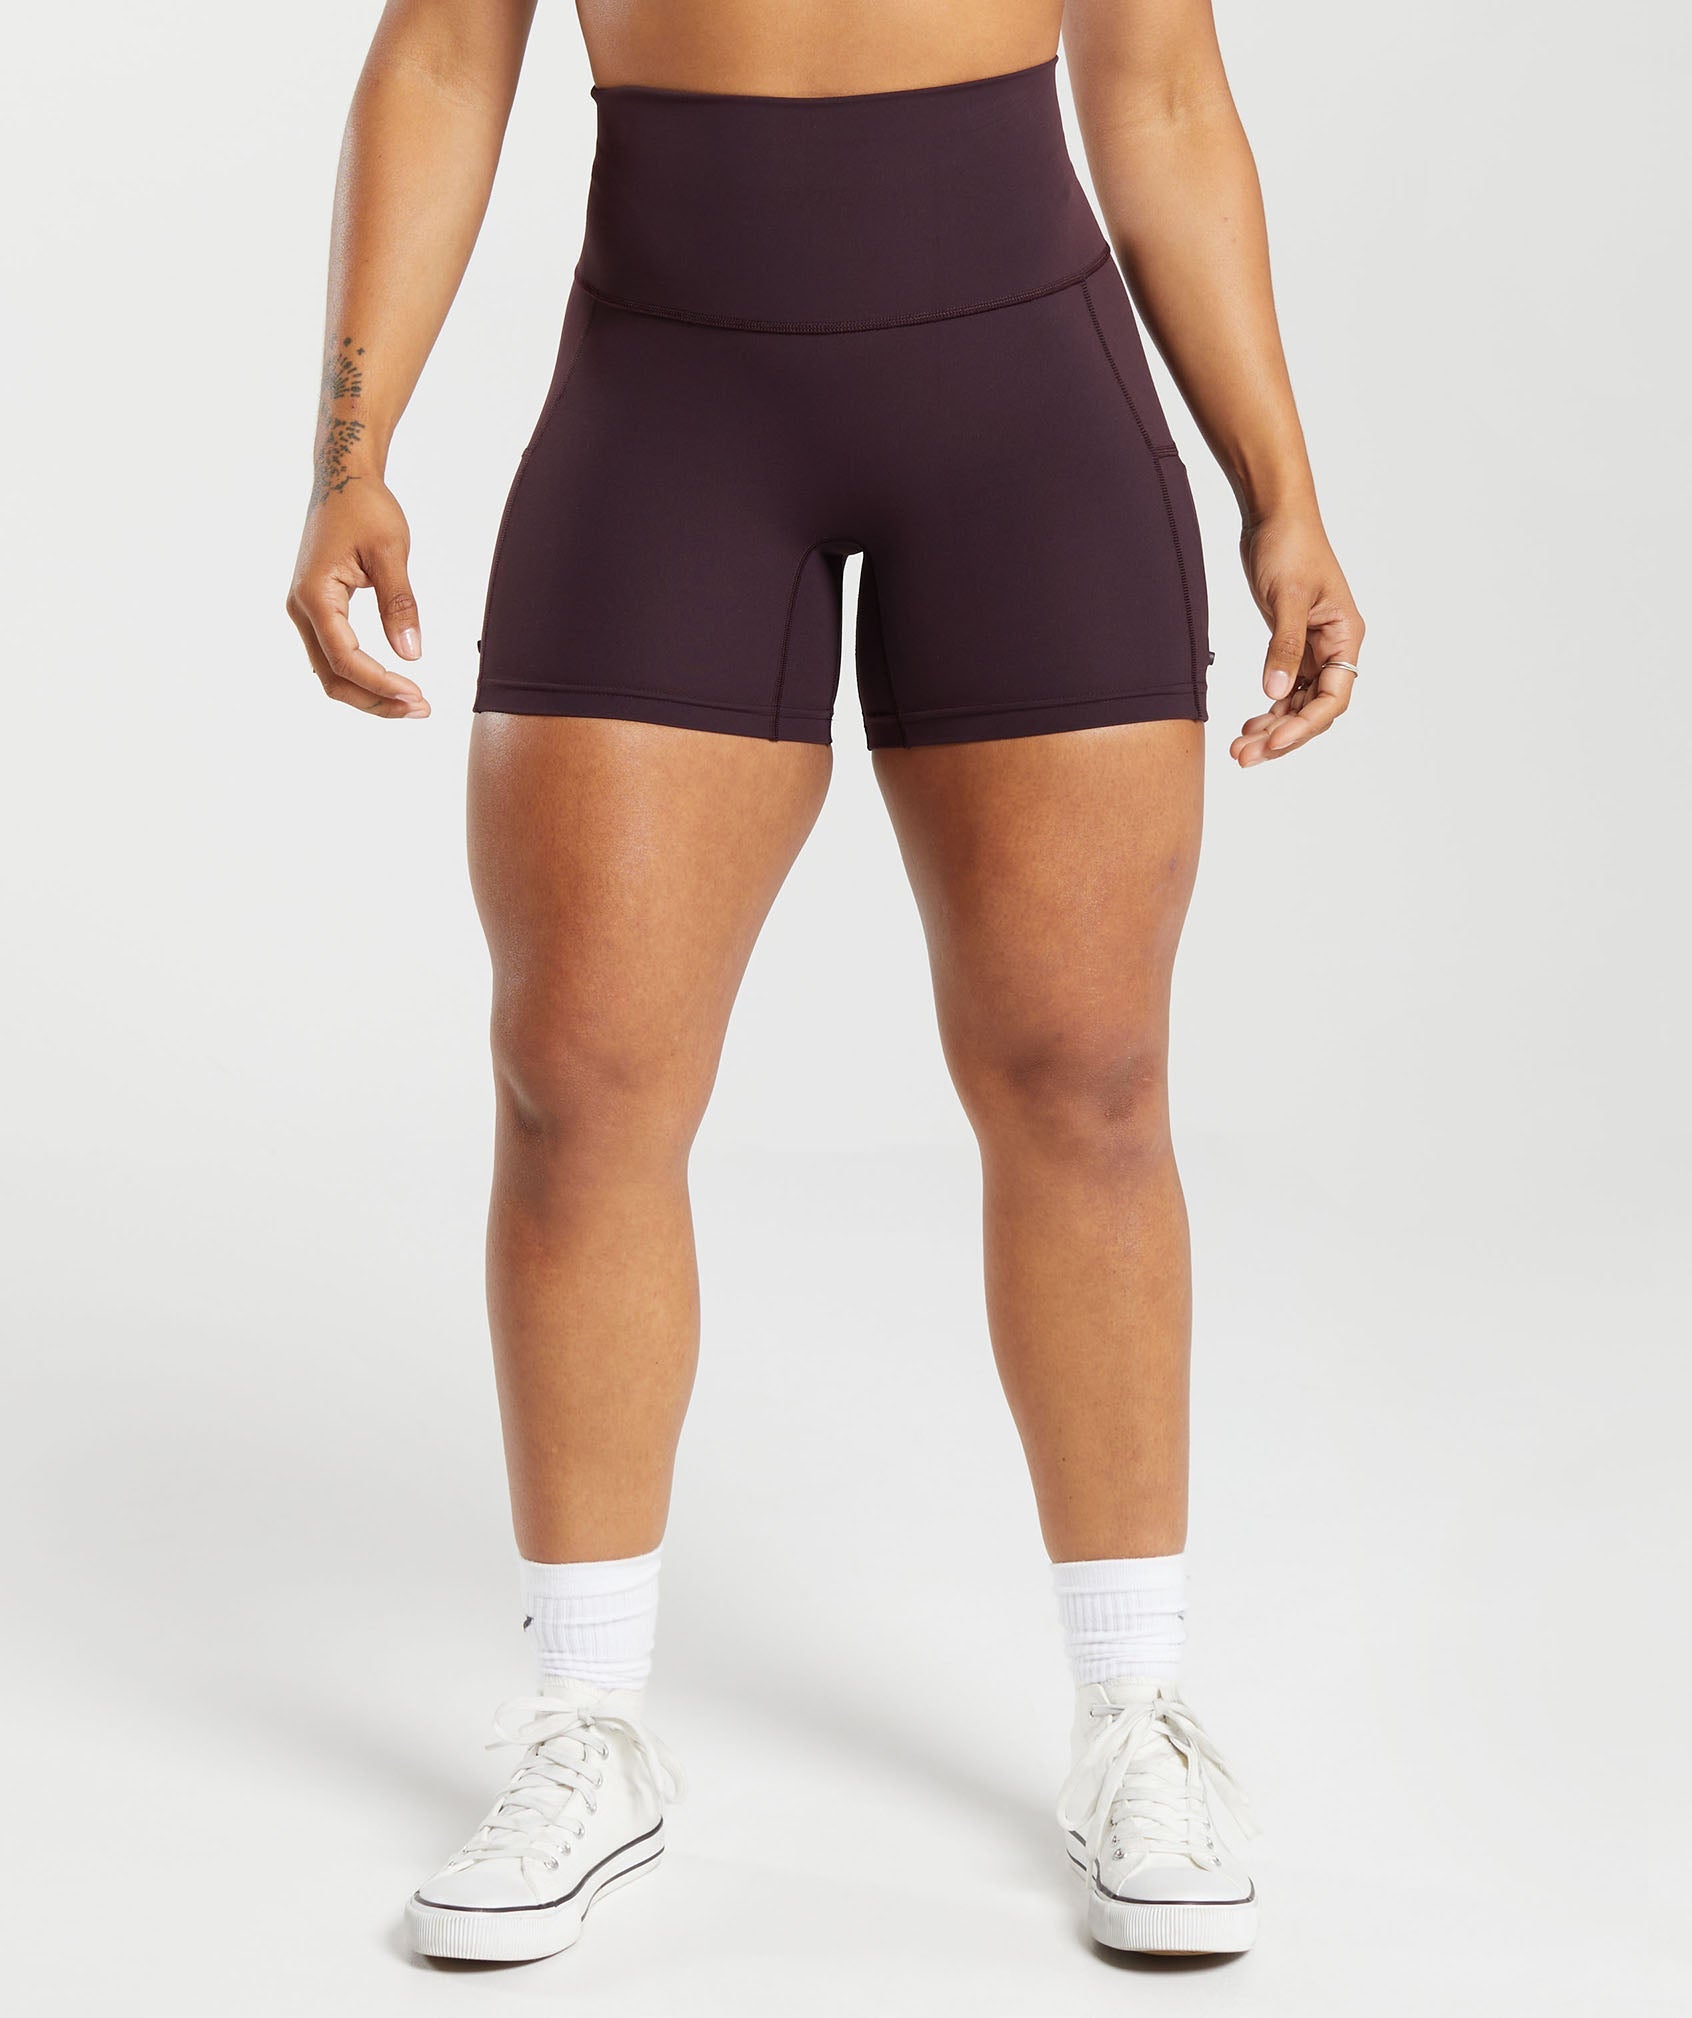 Gymshark Legacy Tight Shorts - Plum Brown